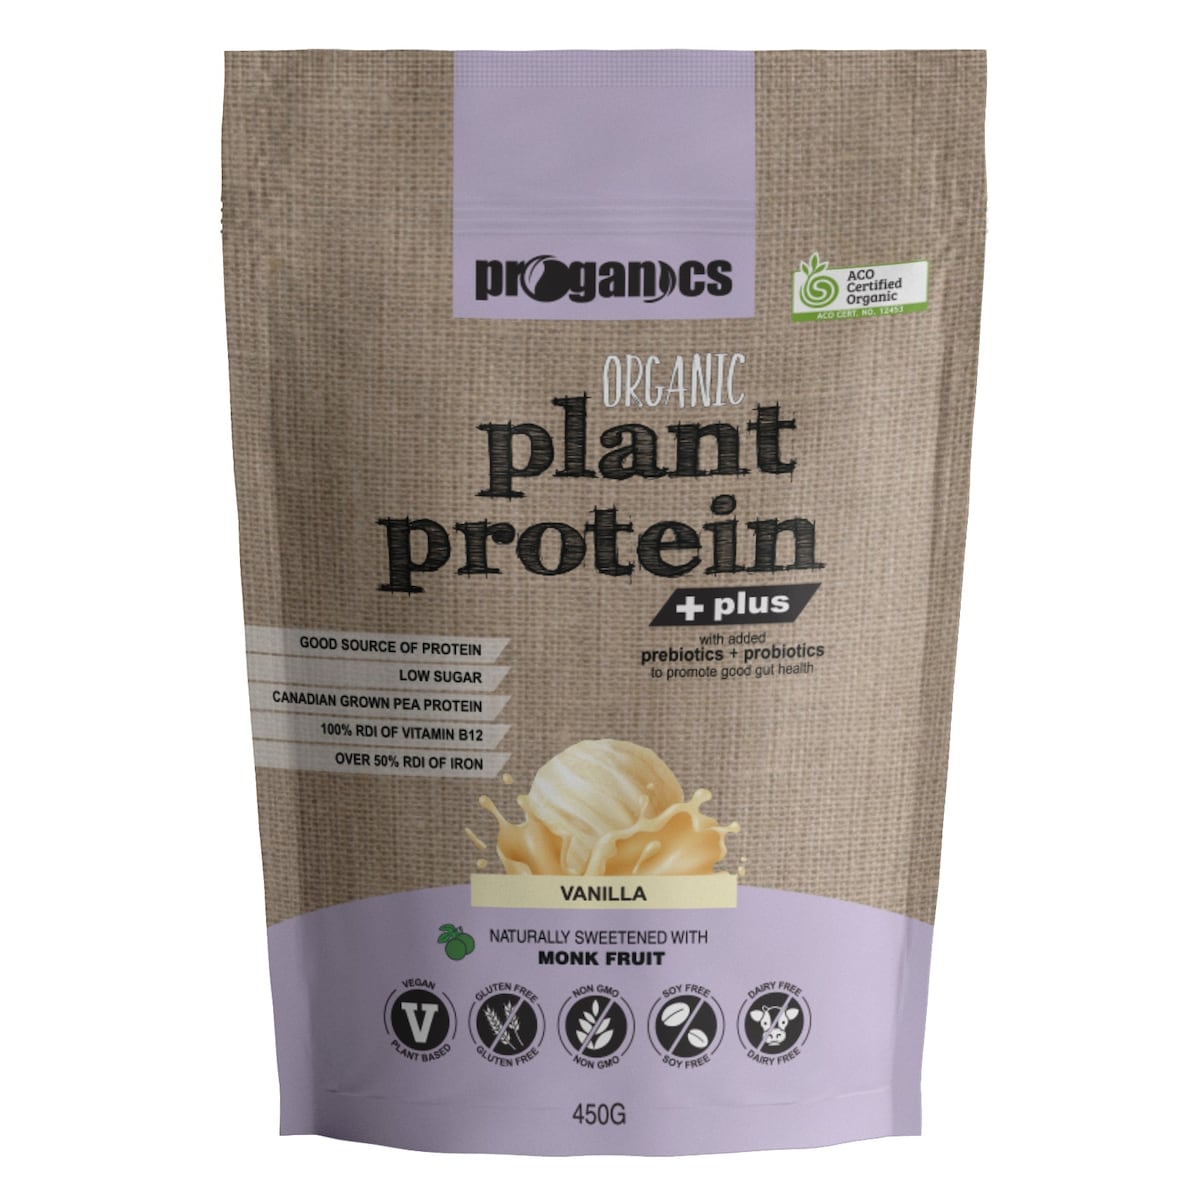 Proganics Organic Plant Protein Plus Vanilla 450g Australia